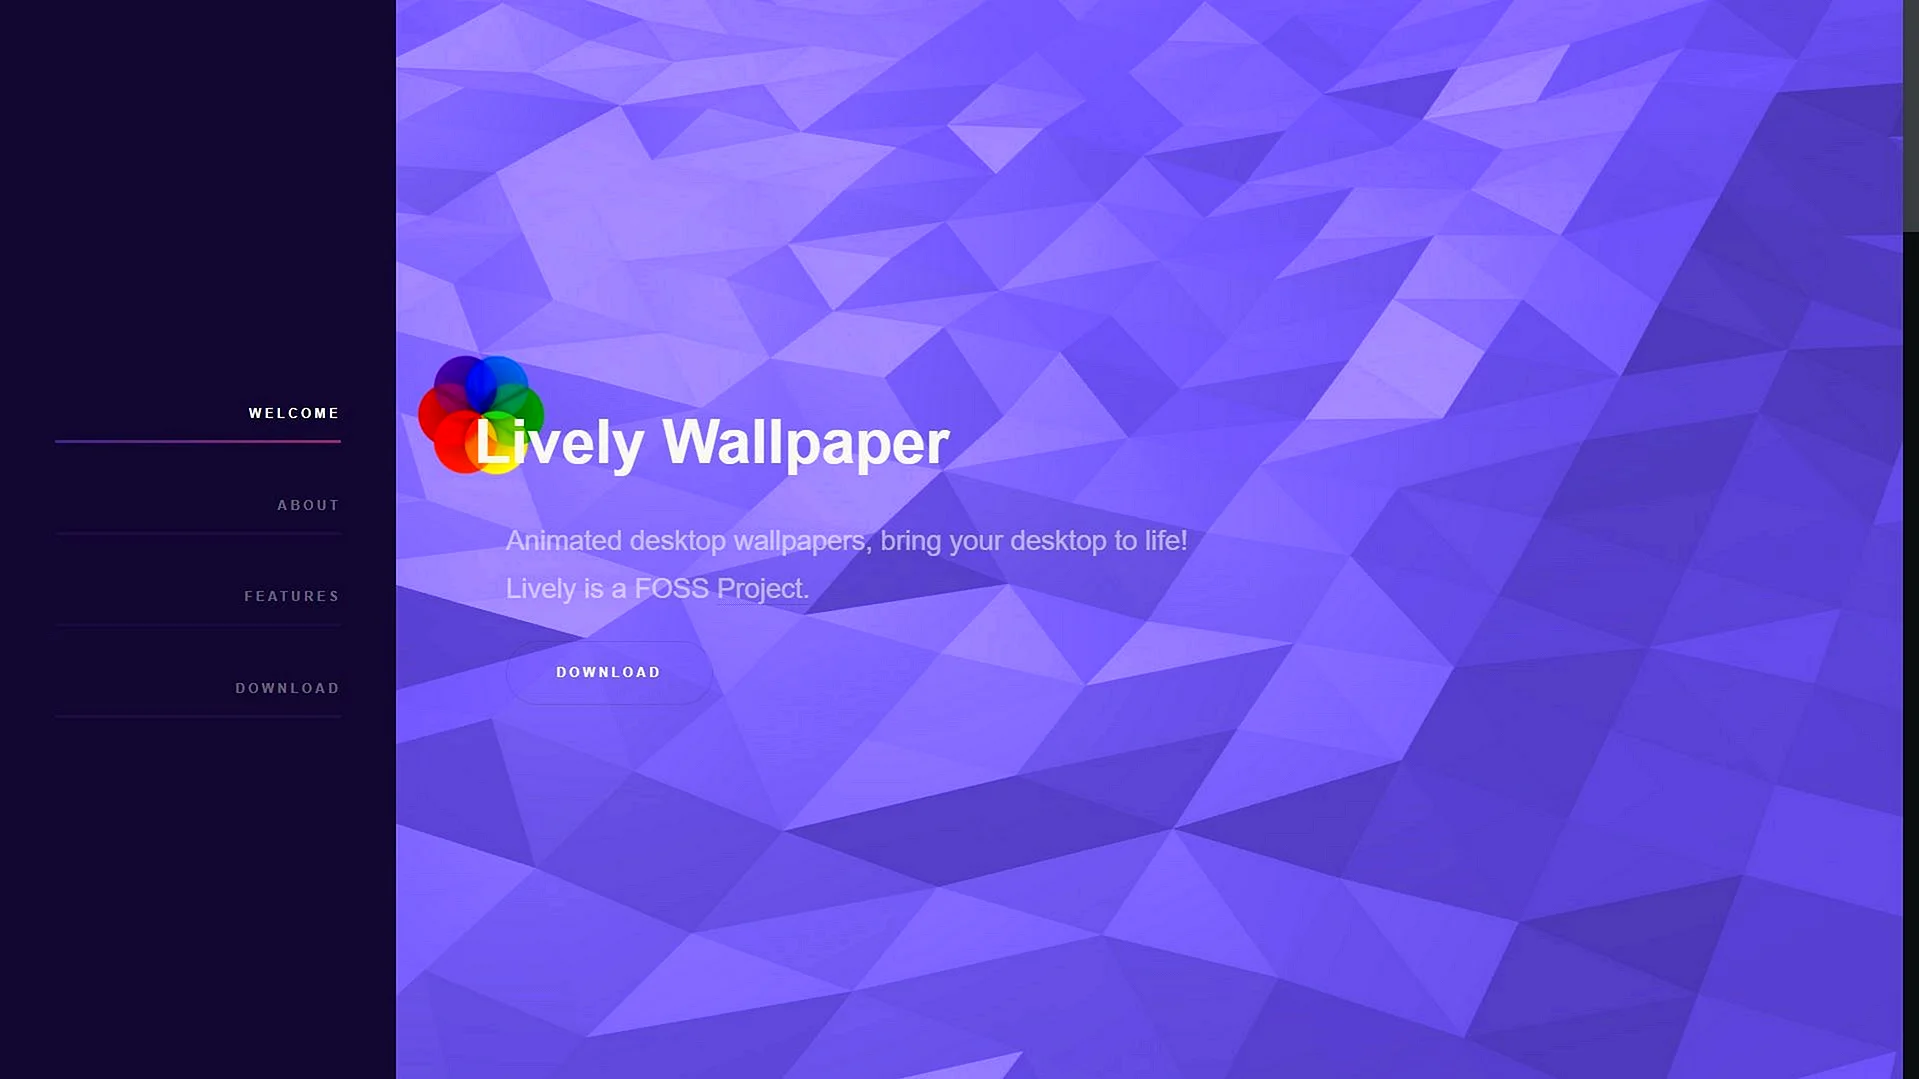 Microsoft lively wallpaper. Обои для Lively Wallpaper. Lively Wallpaper приложение. Обои для Ливели валпапер. Обои с приложения Wallpapers.